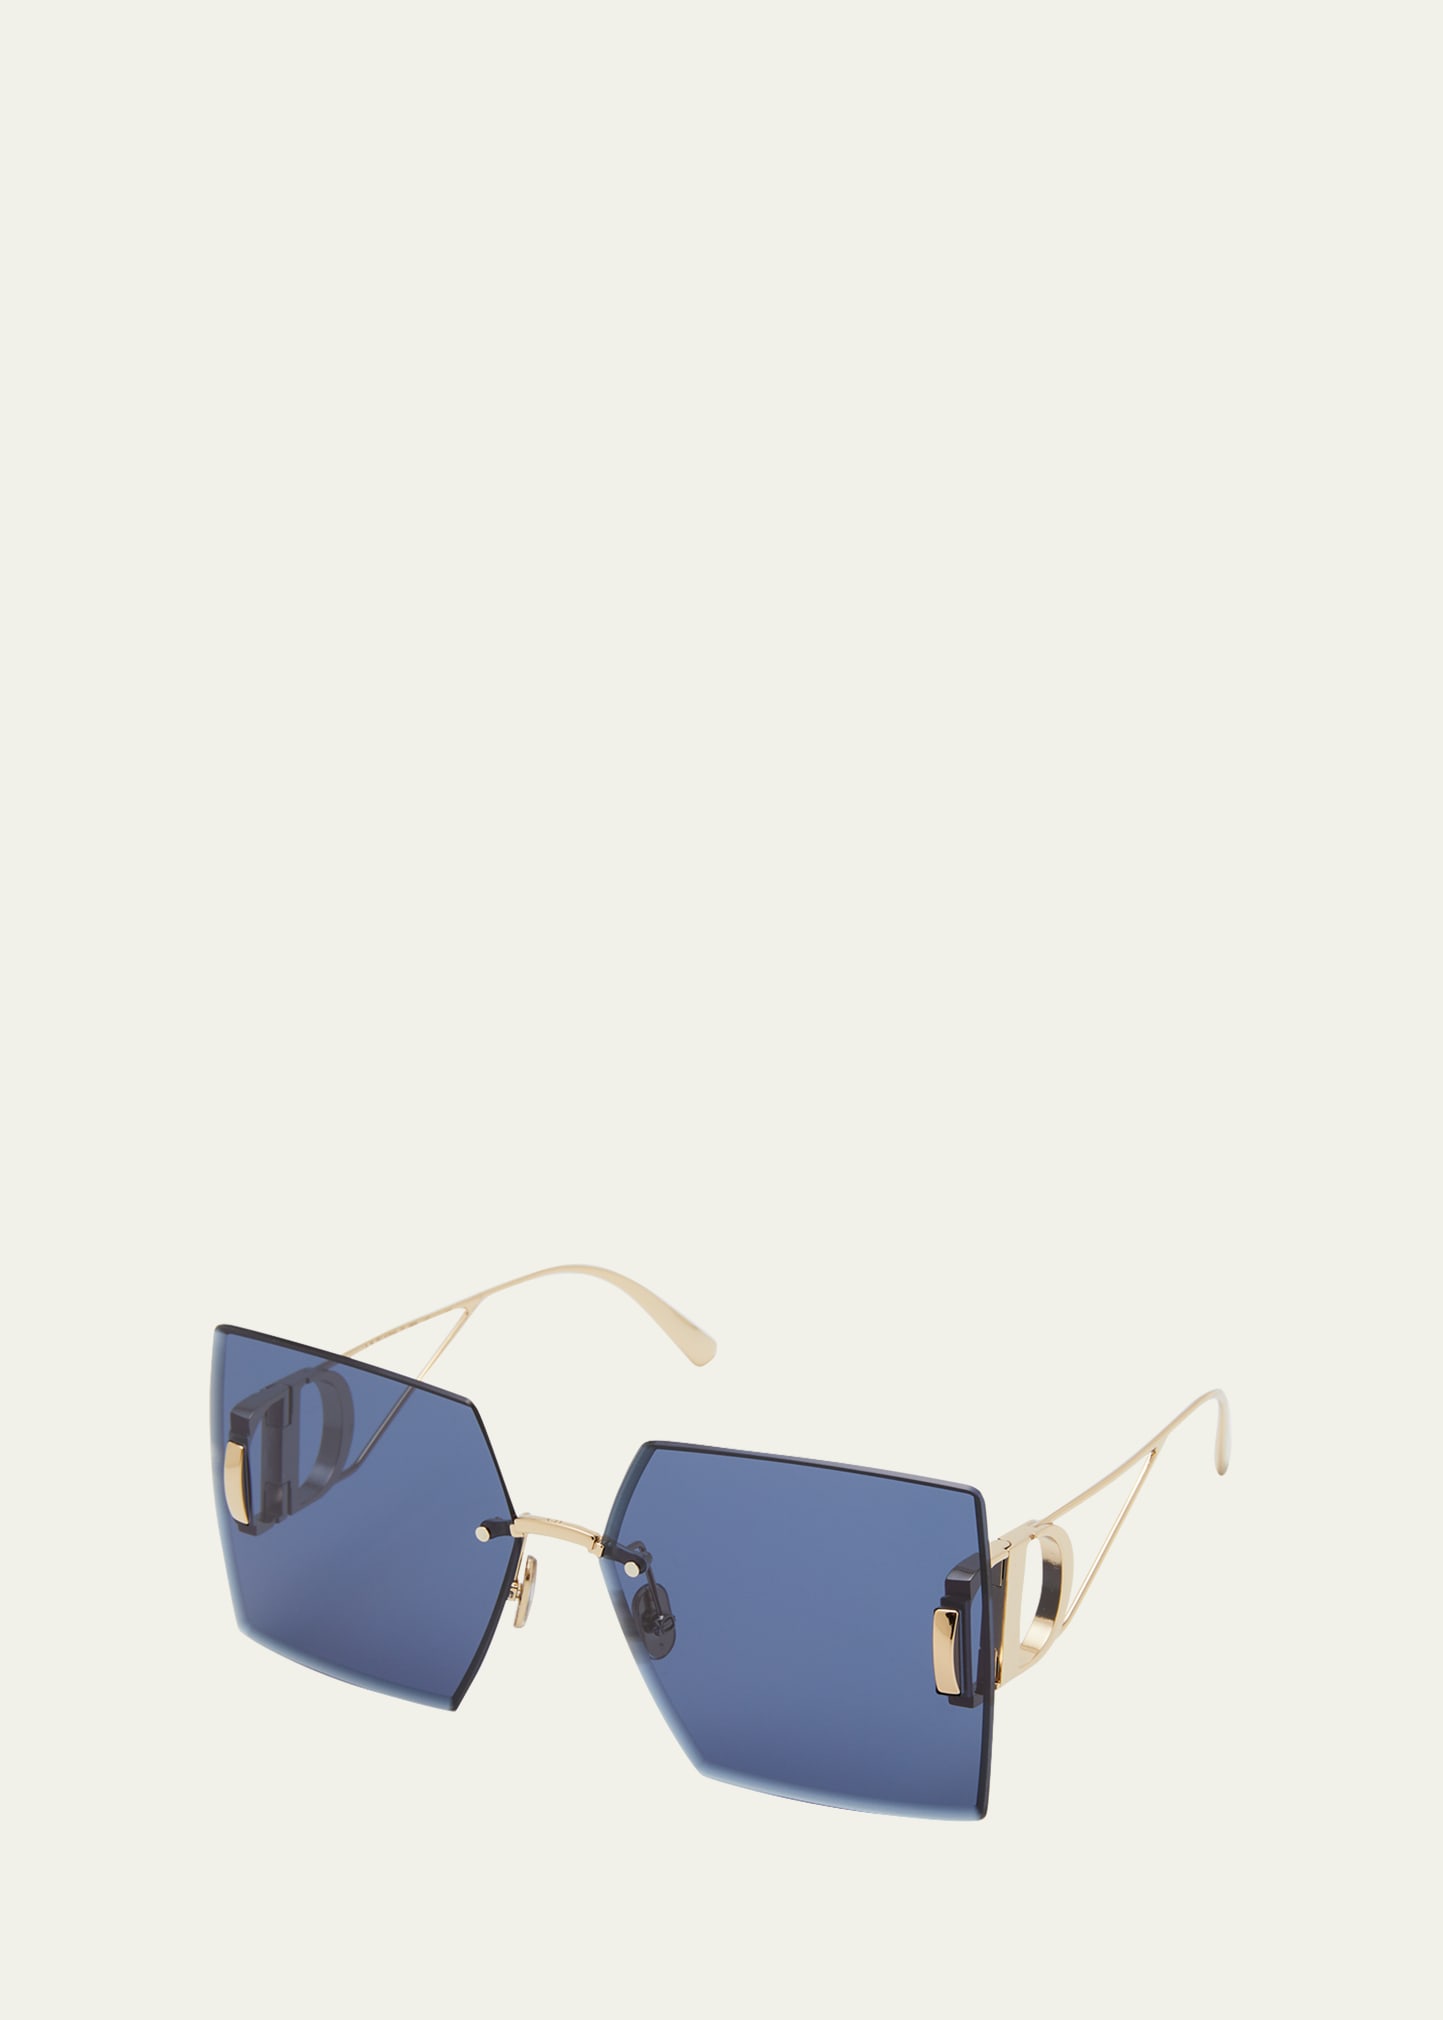 30Montaigne S7U Sunglasses